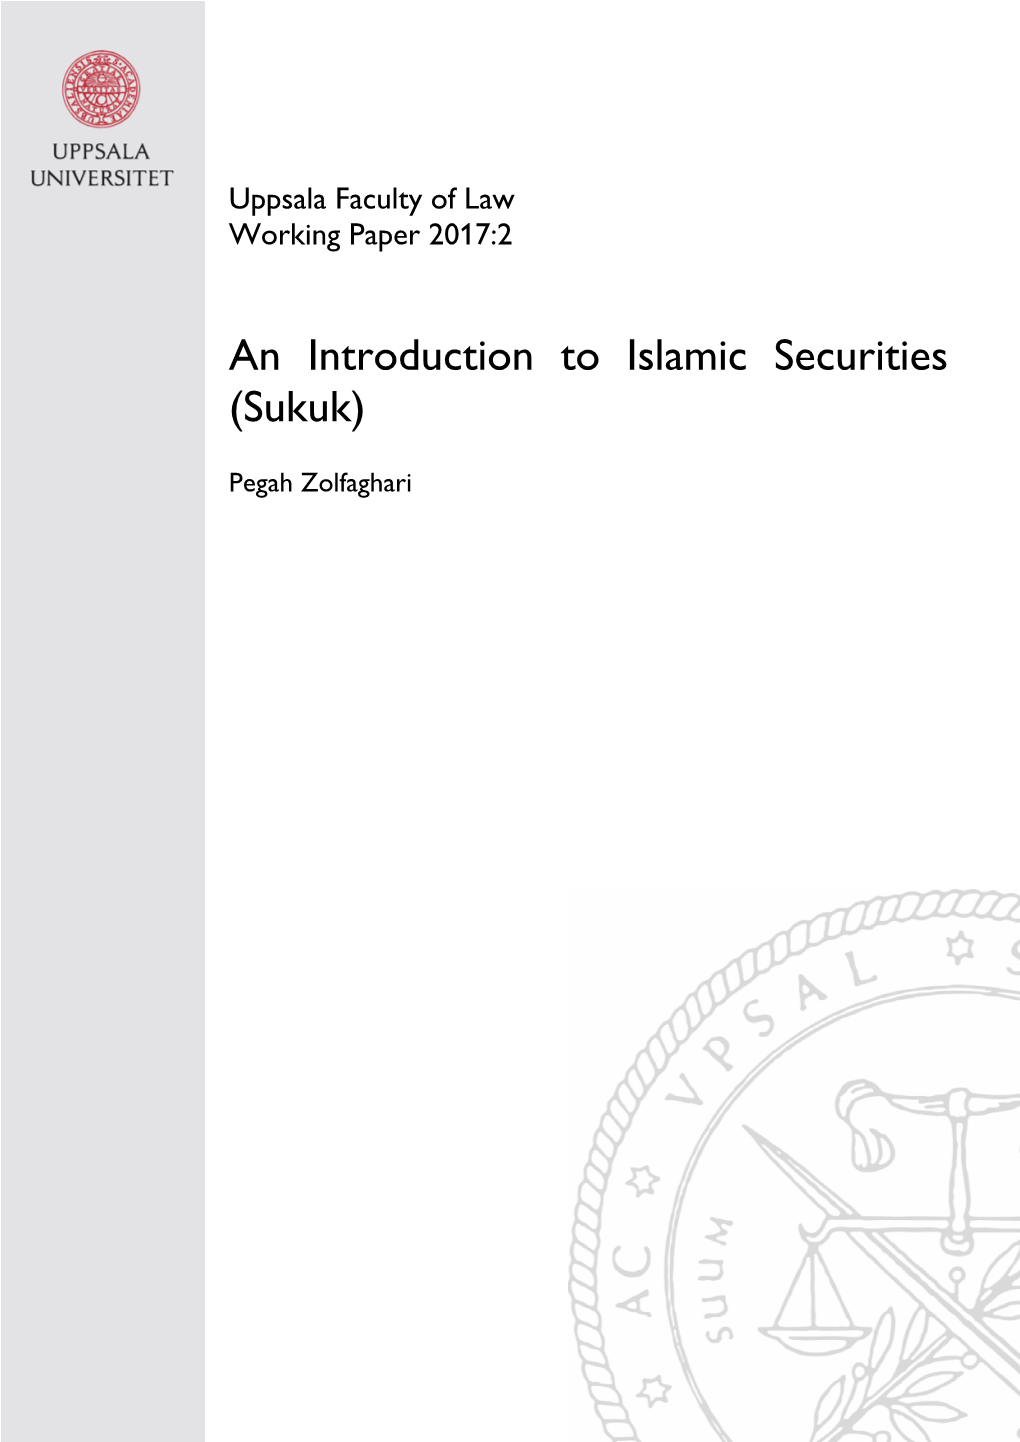 An Introduction to Islamic Securities (Sukuk)